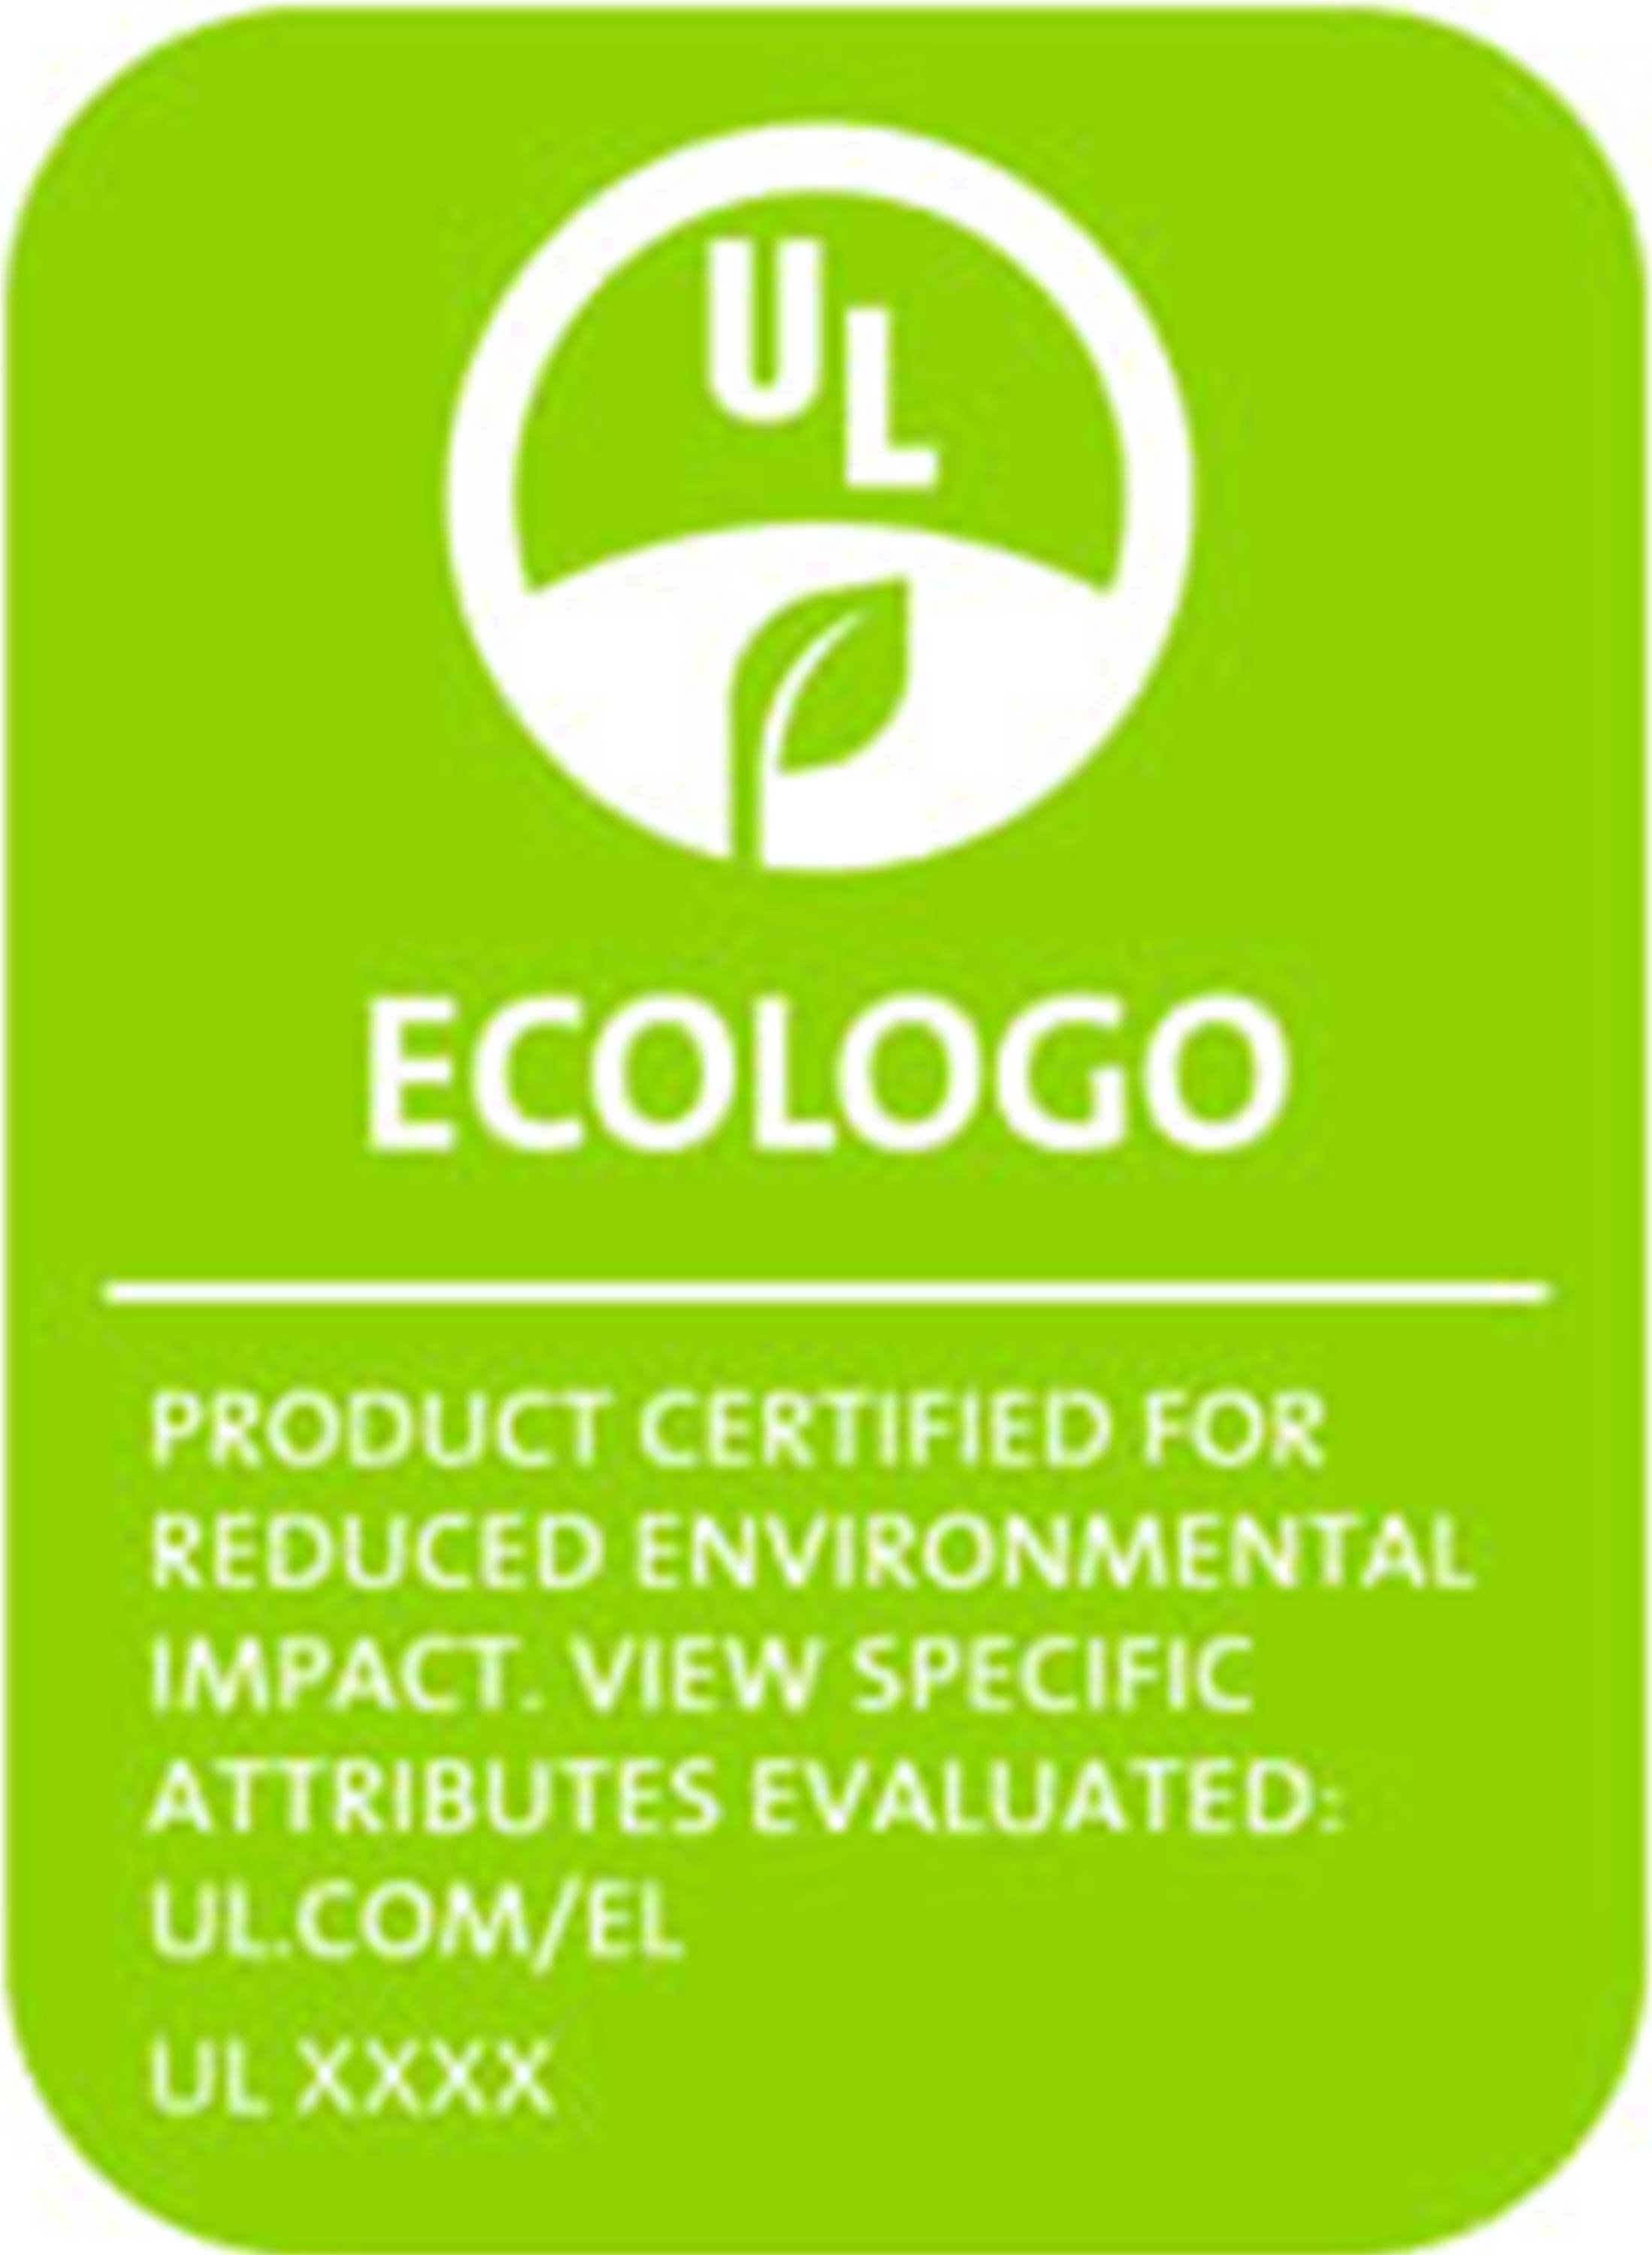 Ecologo mark